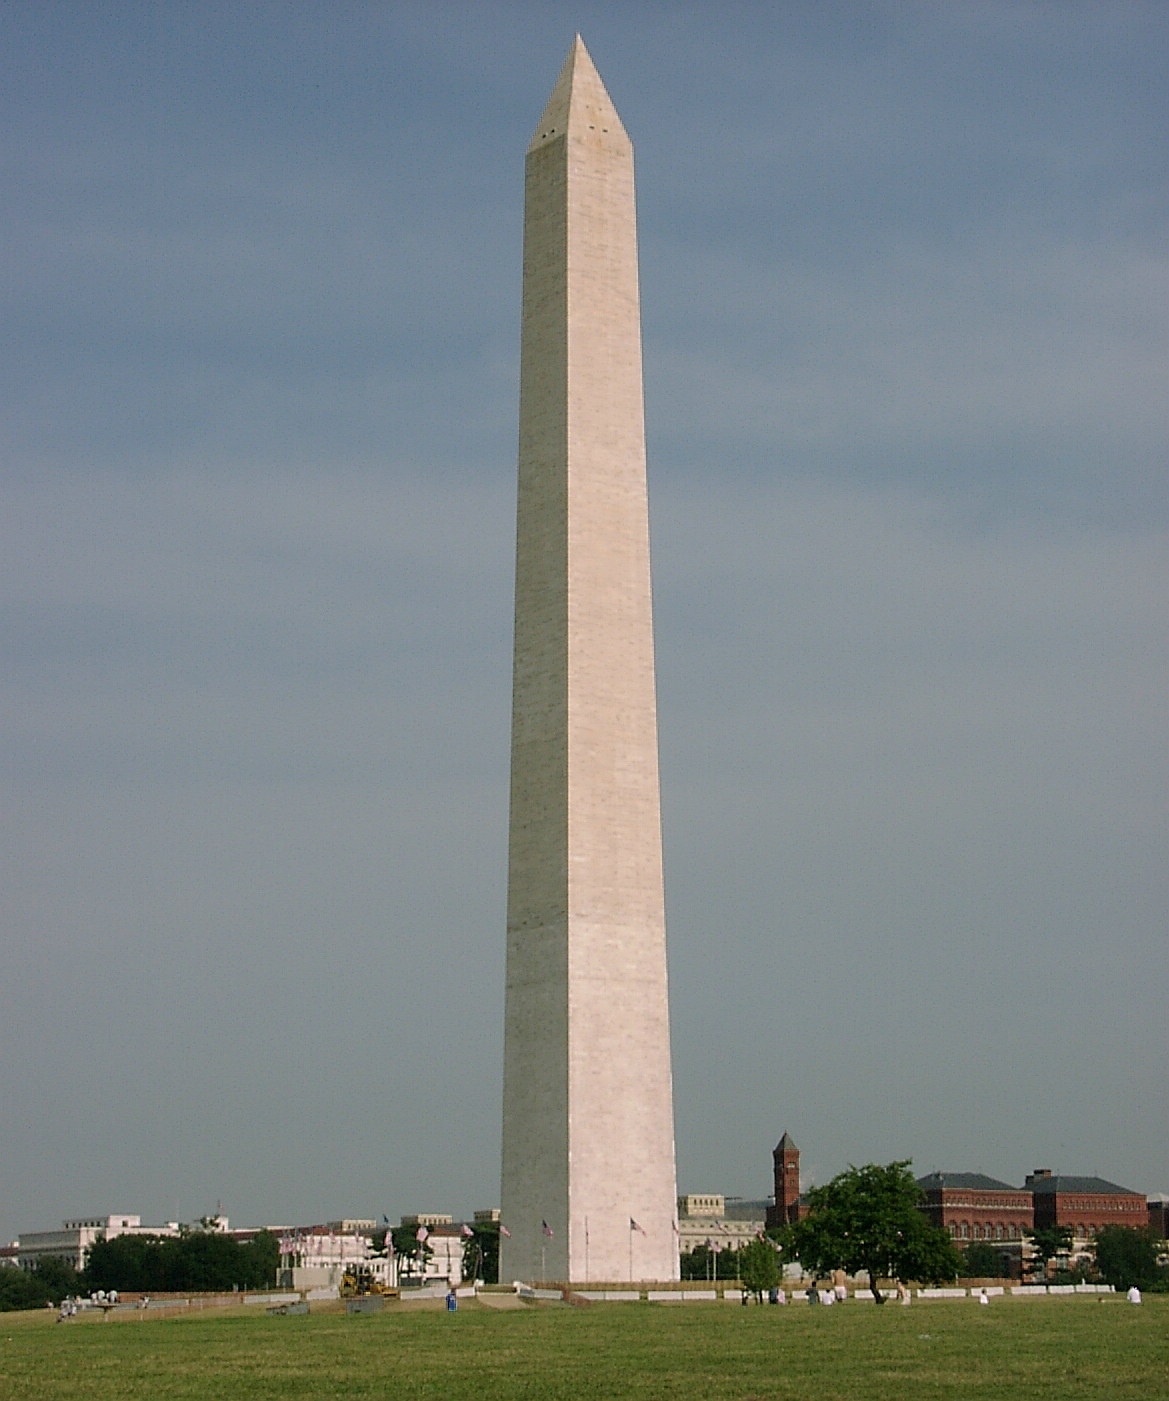 Obelisk standing in Washington, D.C.